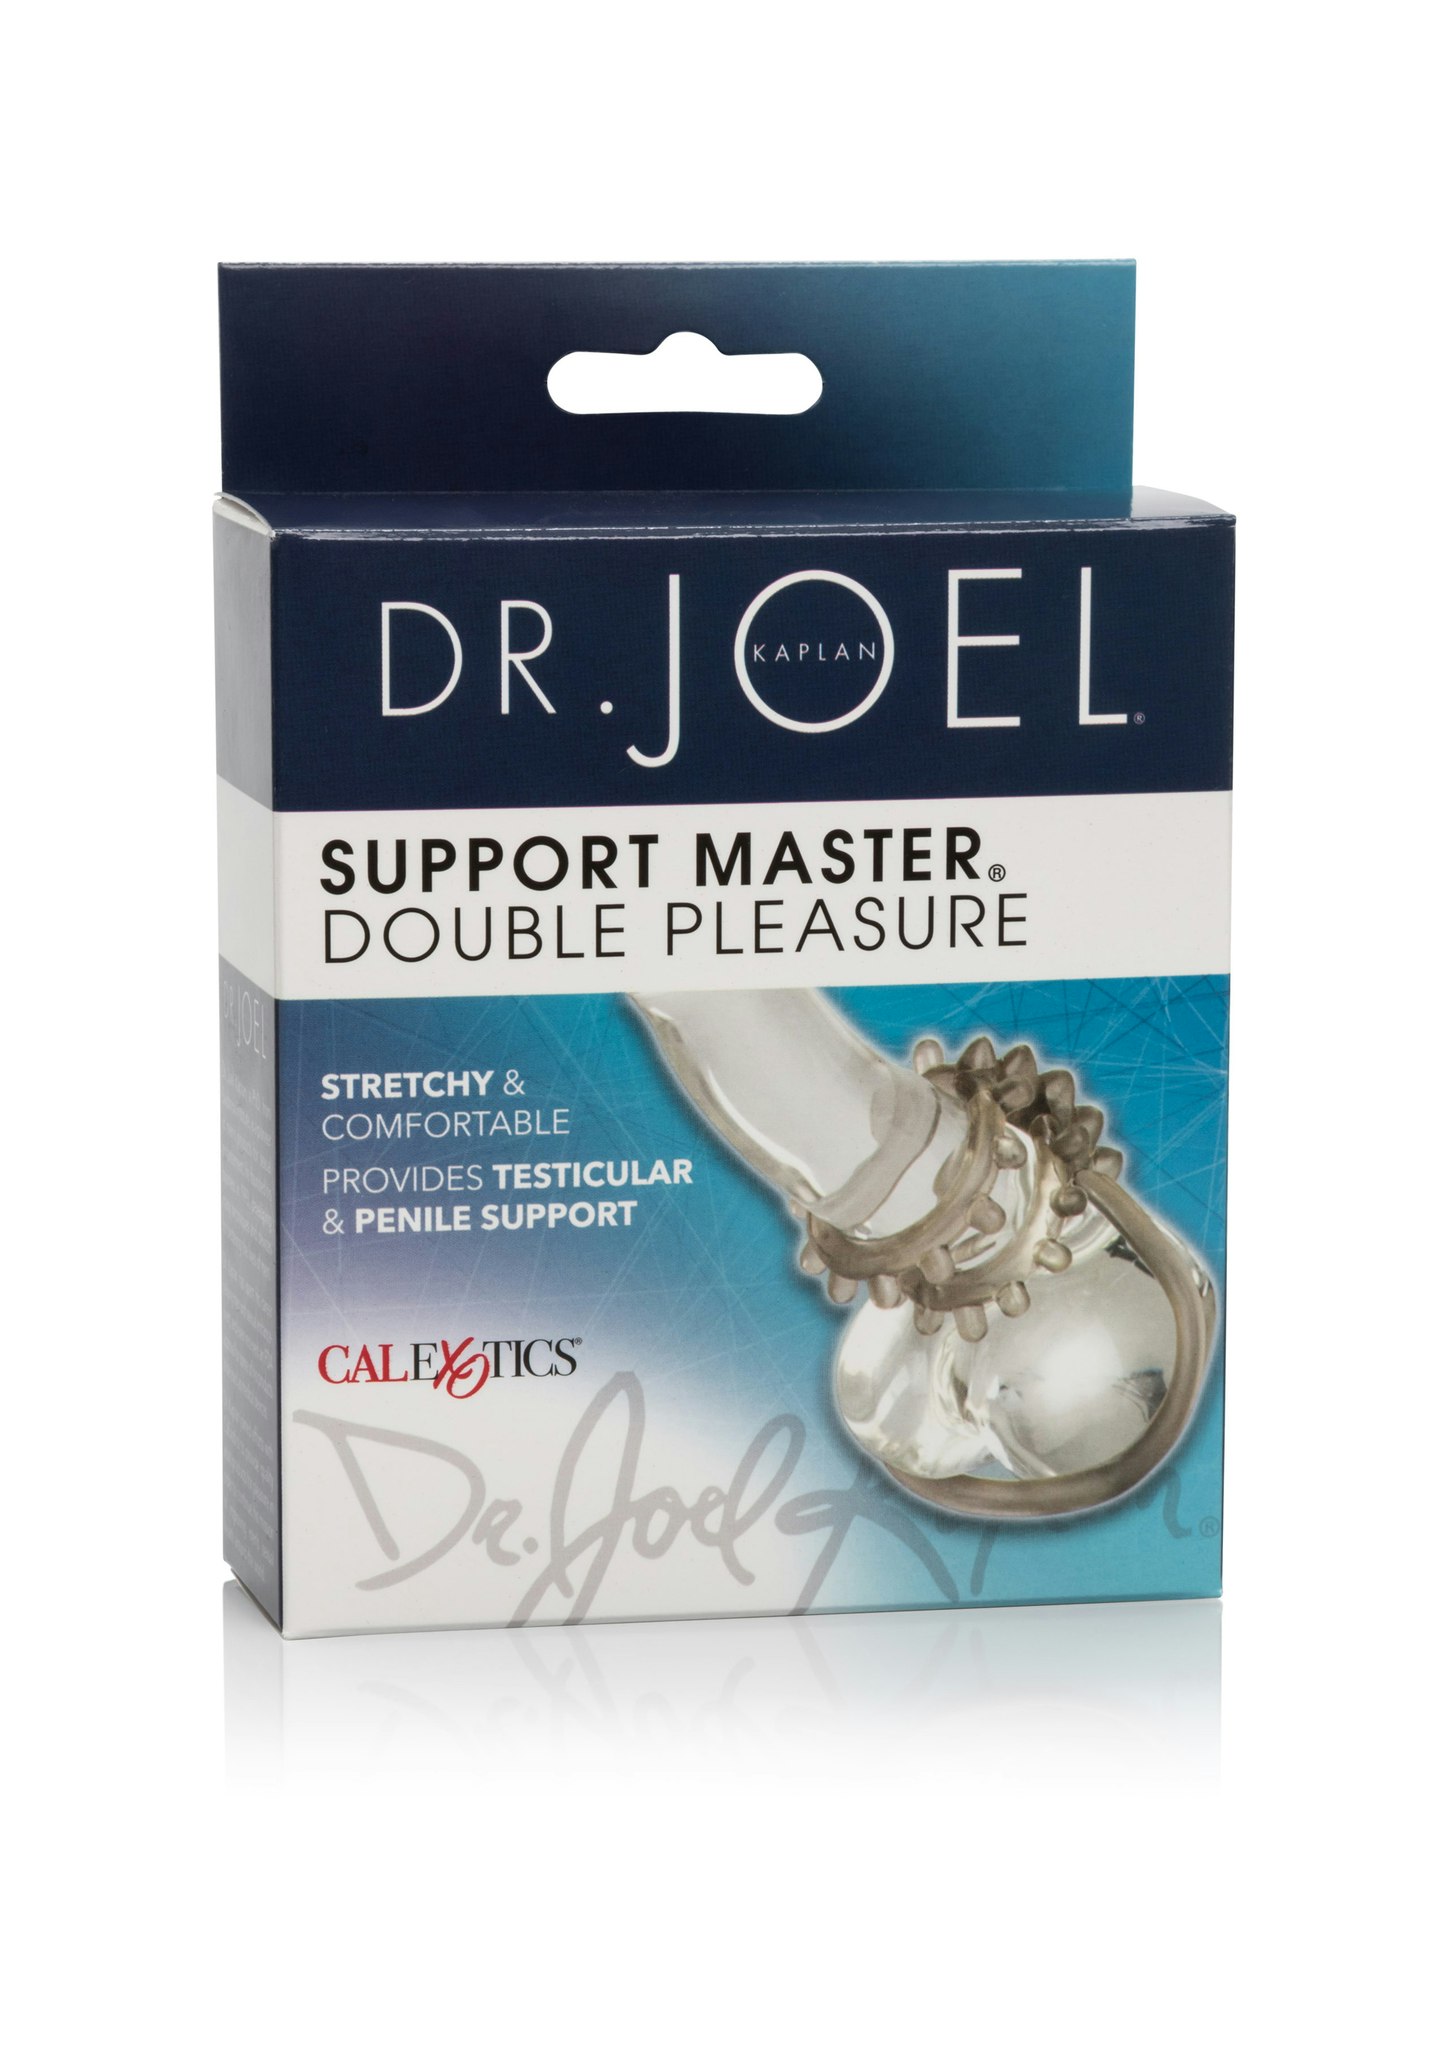 Dr Joel Kaplan - Support master double pleasure, Smoke